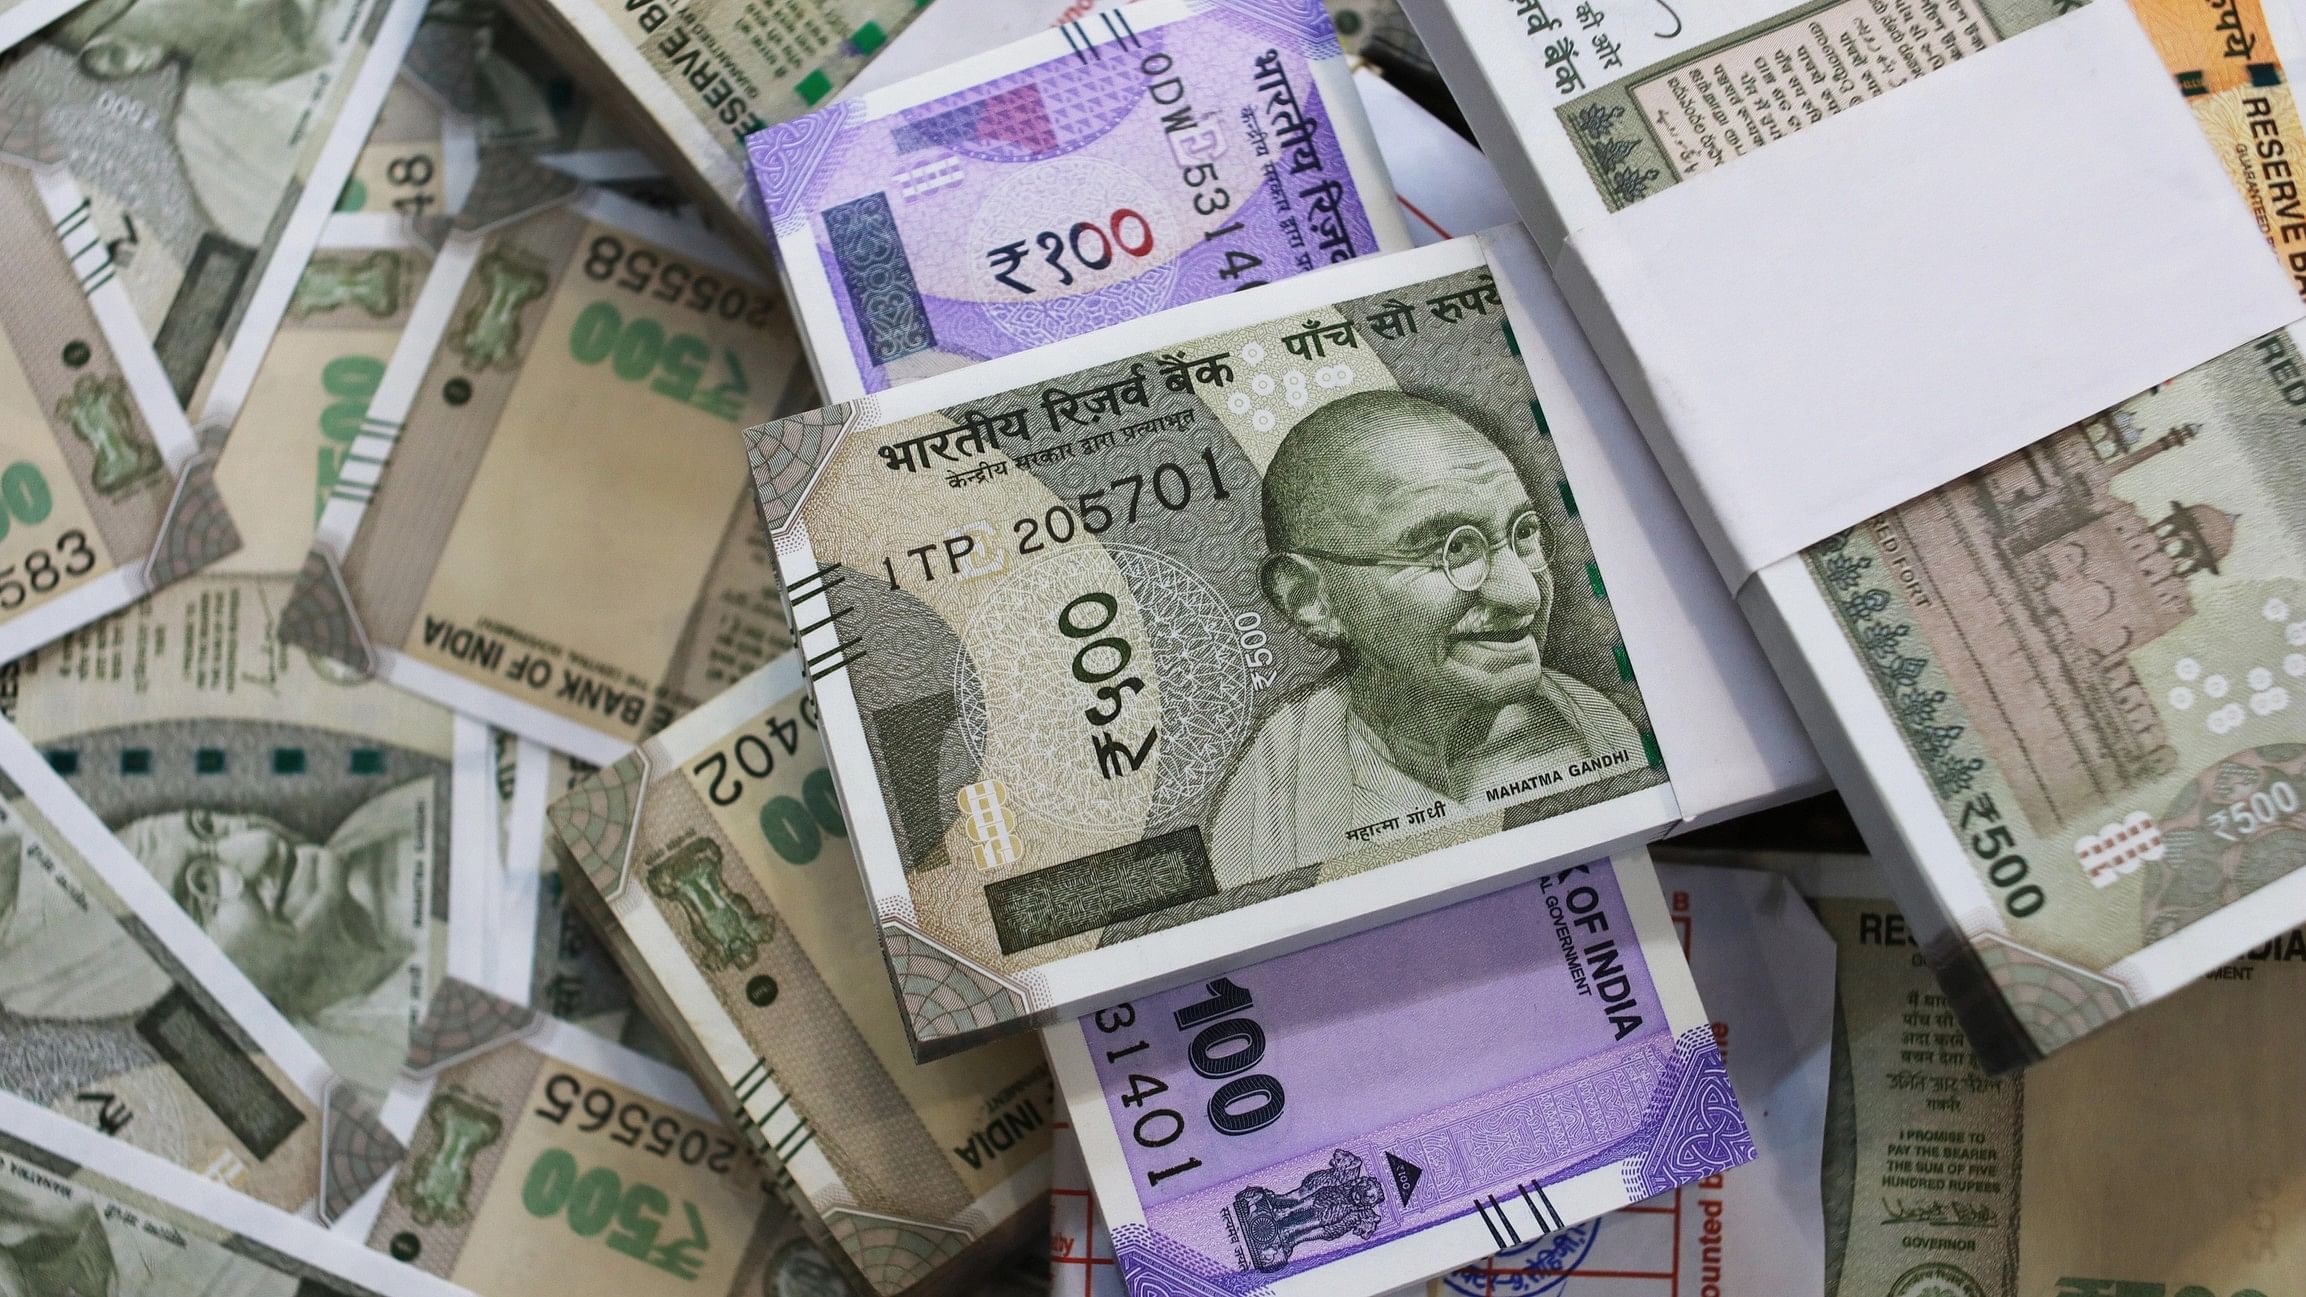 <div class="paragraphs"><p>Representative image showing Indian rupee.</p></div>